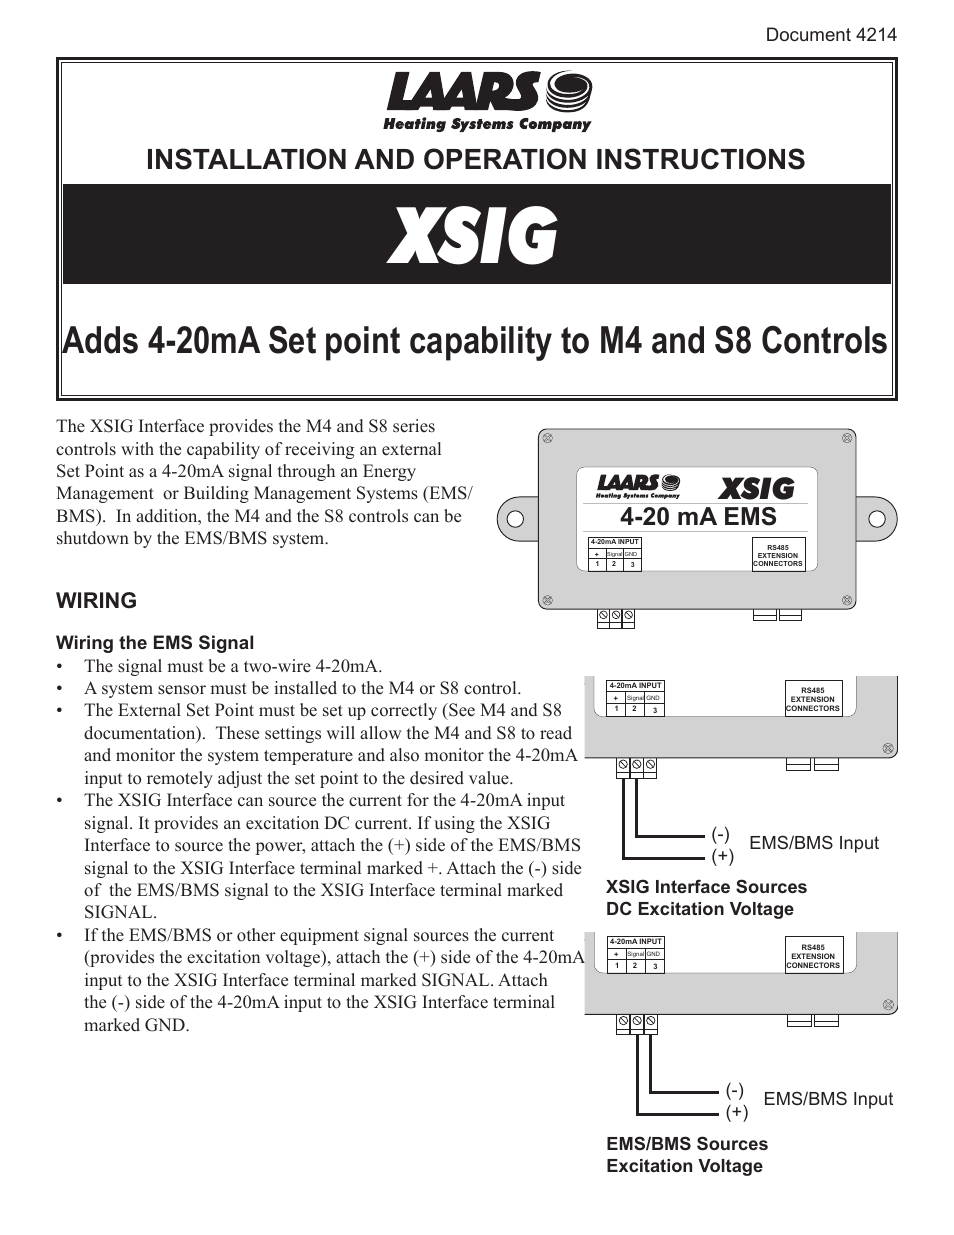 XSIG - Install and Operating Manual